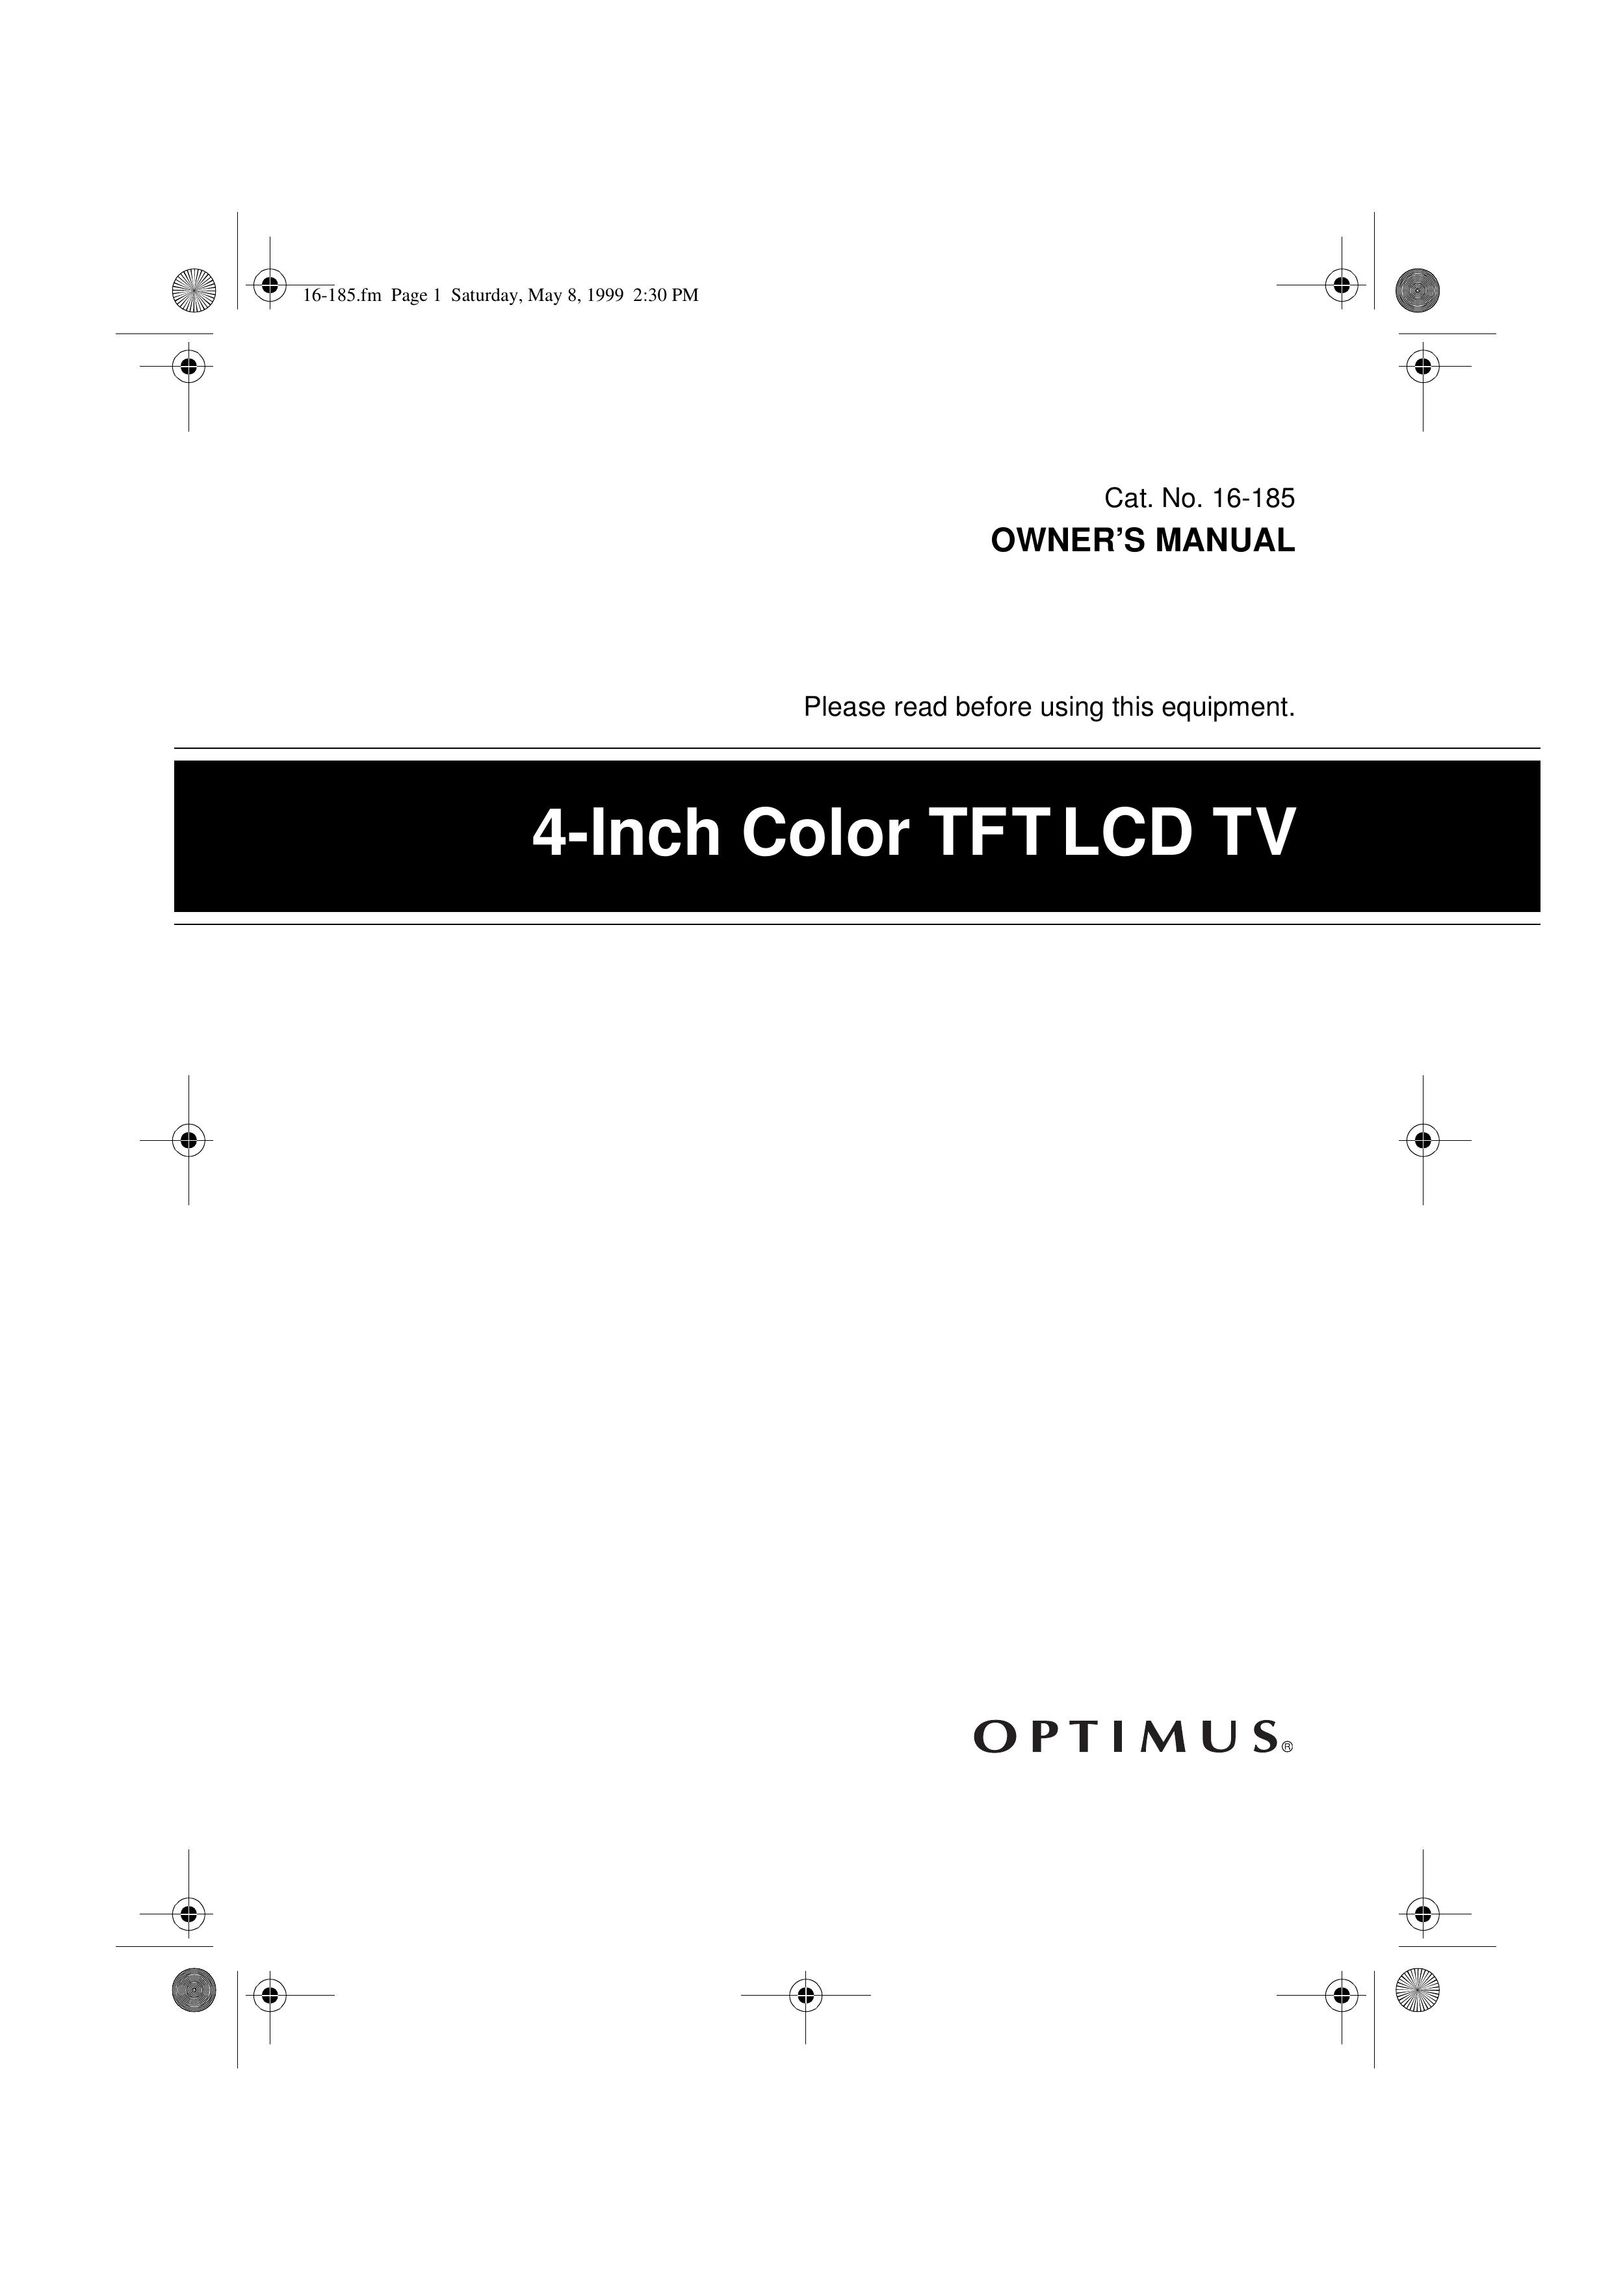 Panasonic 16-185 Flat Panel Television User Manual